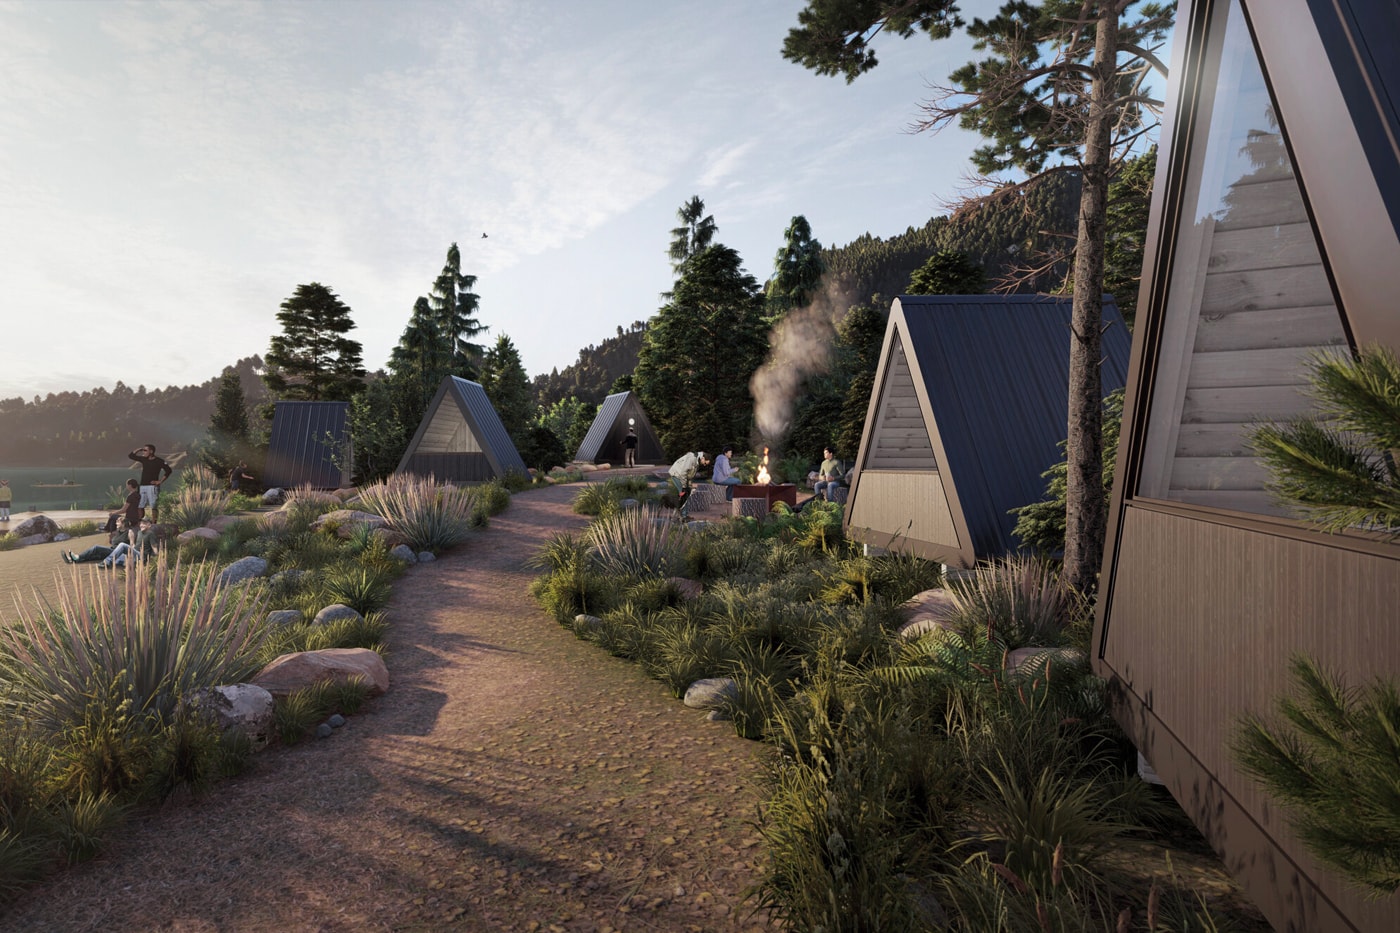 Bivvi Camp Towable Modular A-Frame Cabin outdoors tiny homes off the grid solar sustainability 